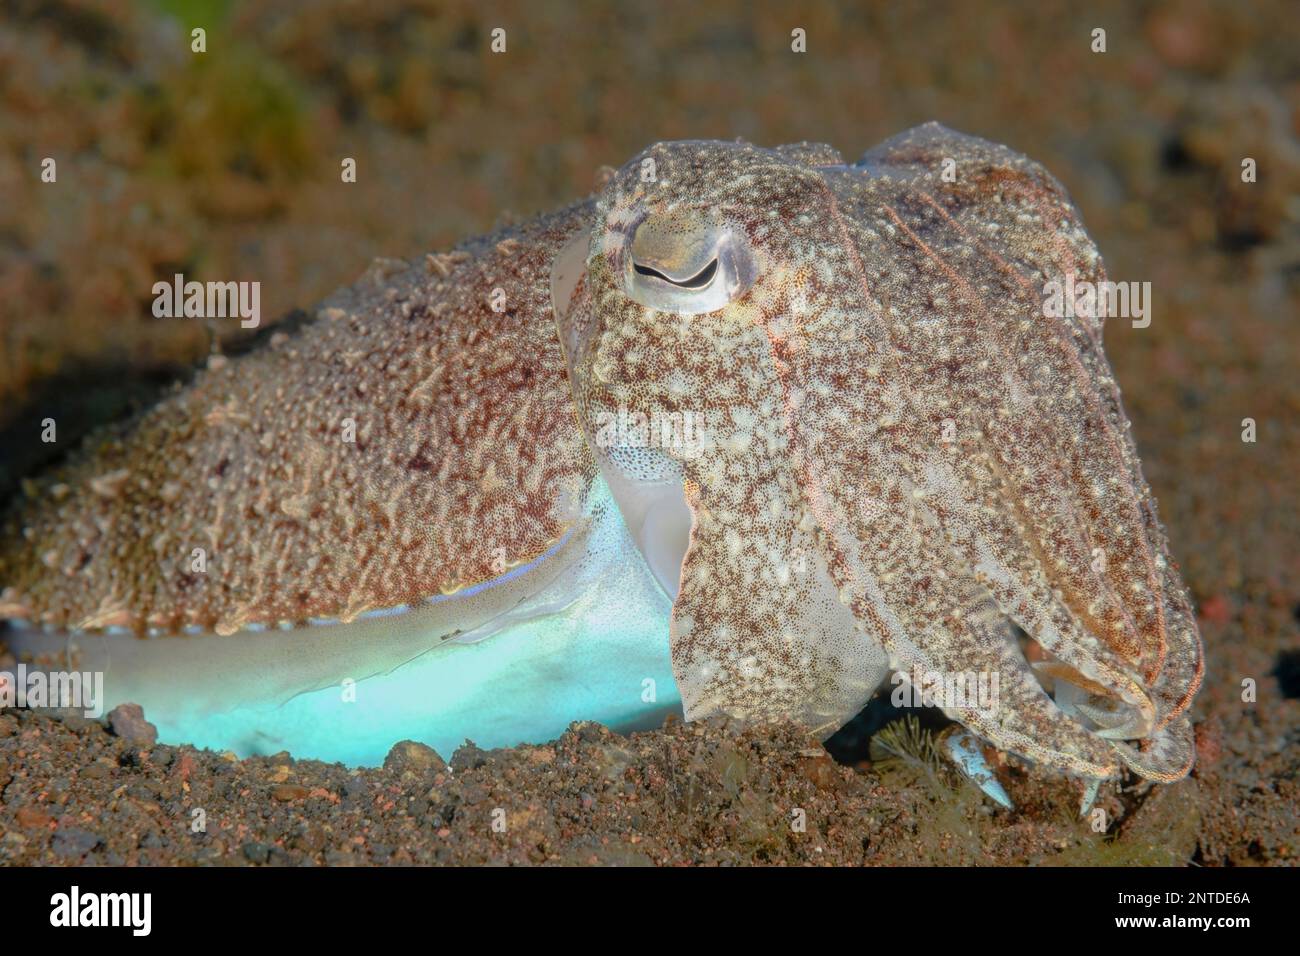 Broadclub cuttlefish, Sepia latimanus, feeding on a crab, Tulamben, Bali, Indonesia, Pacific Stock Photo